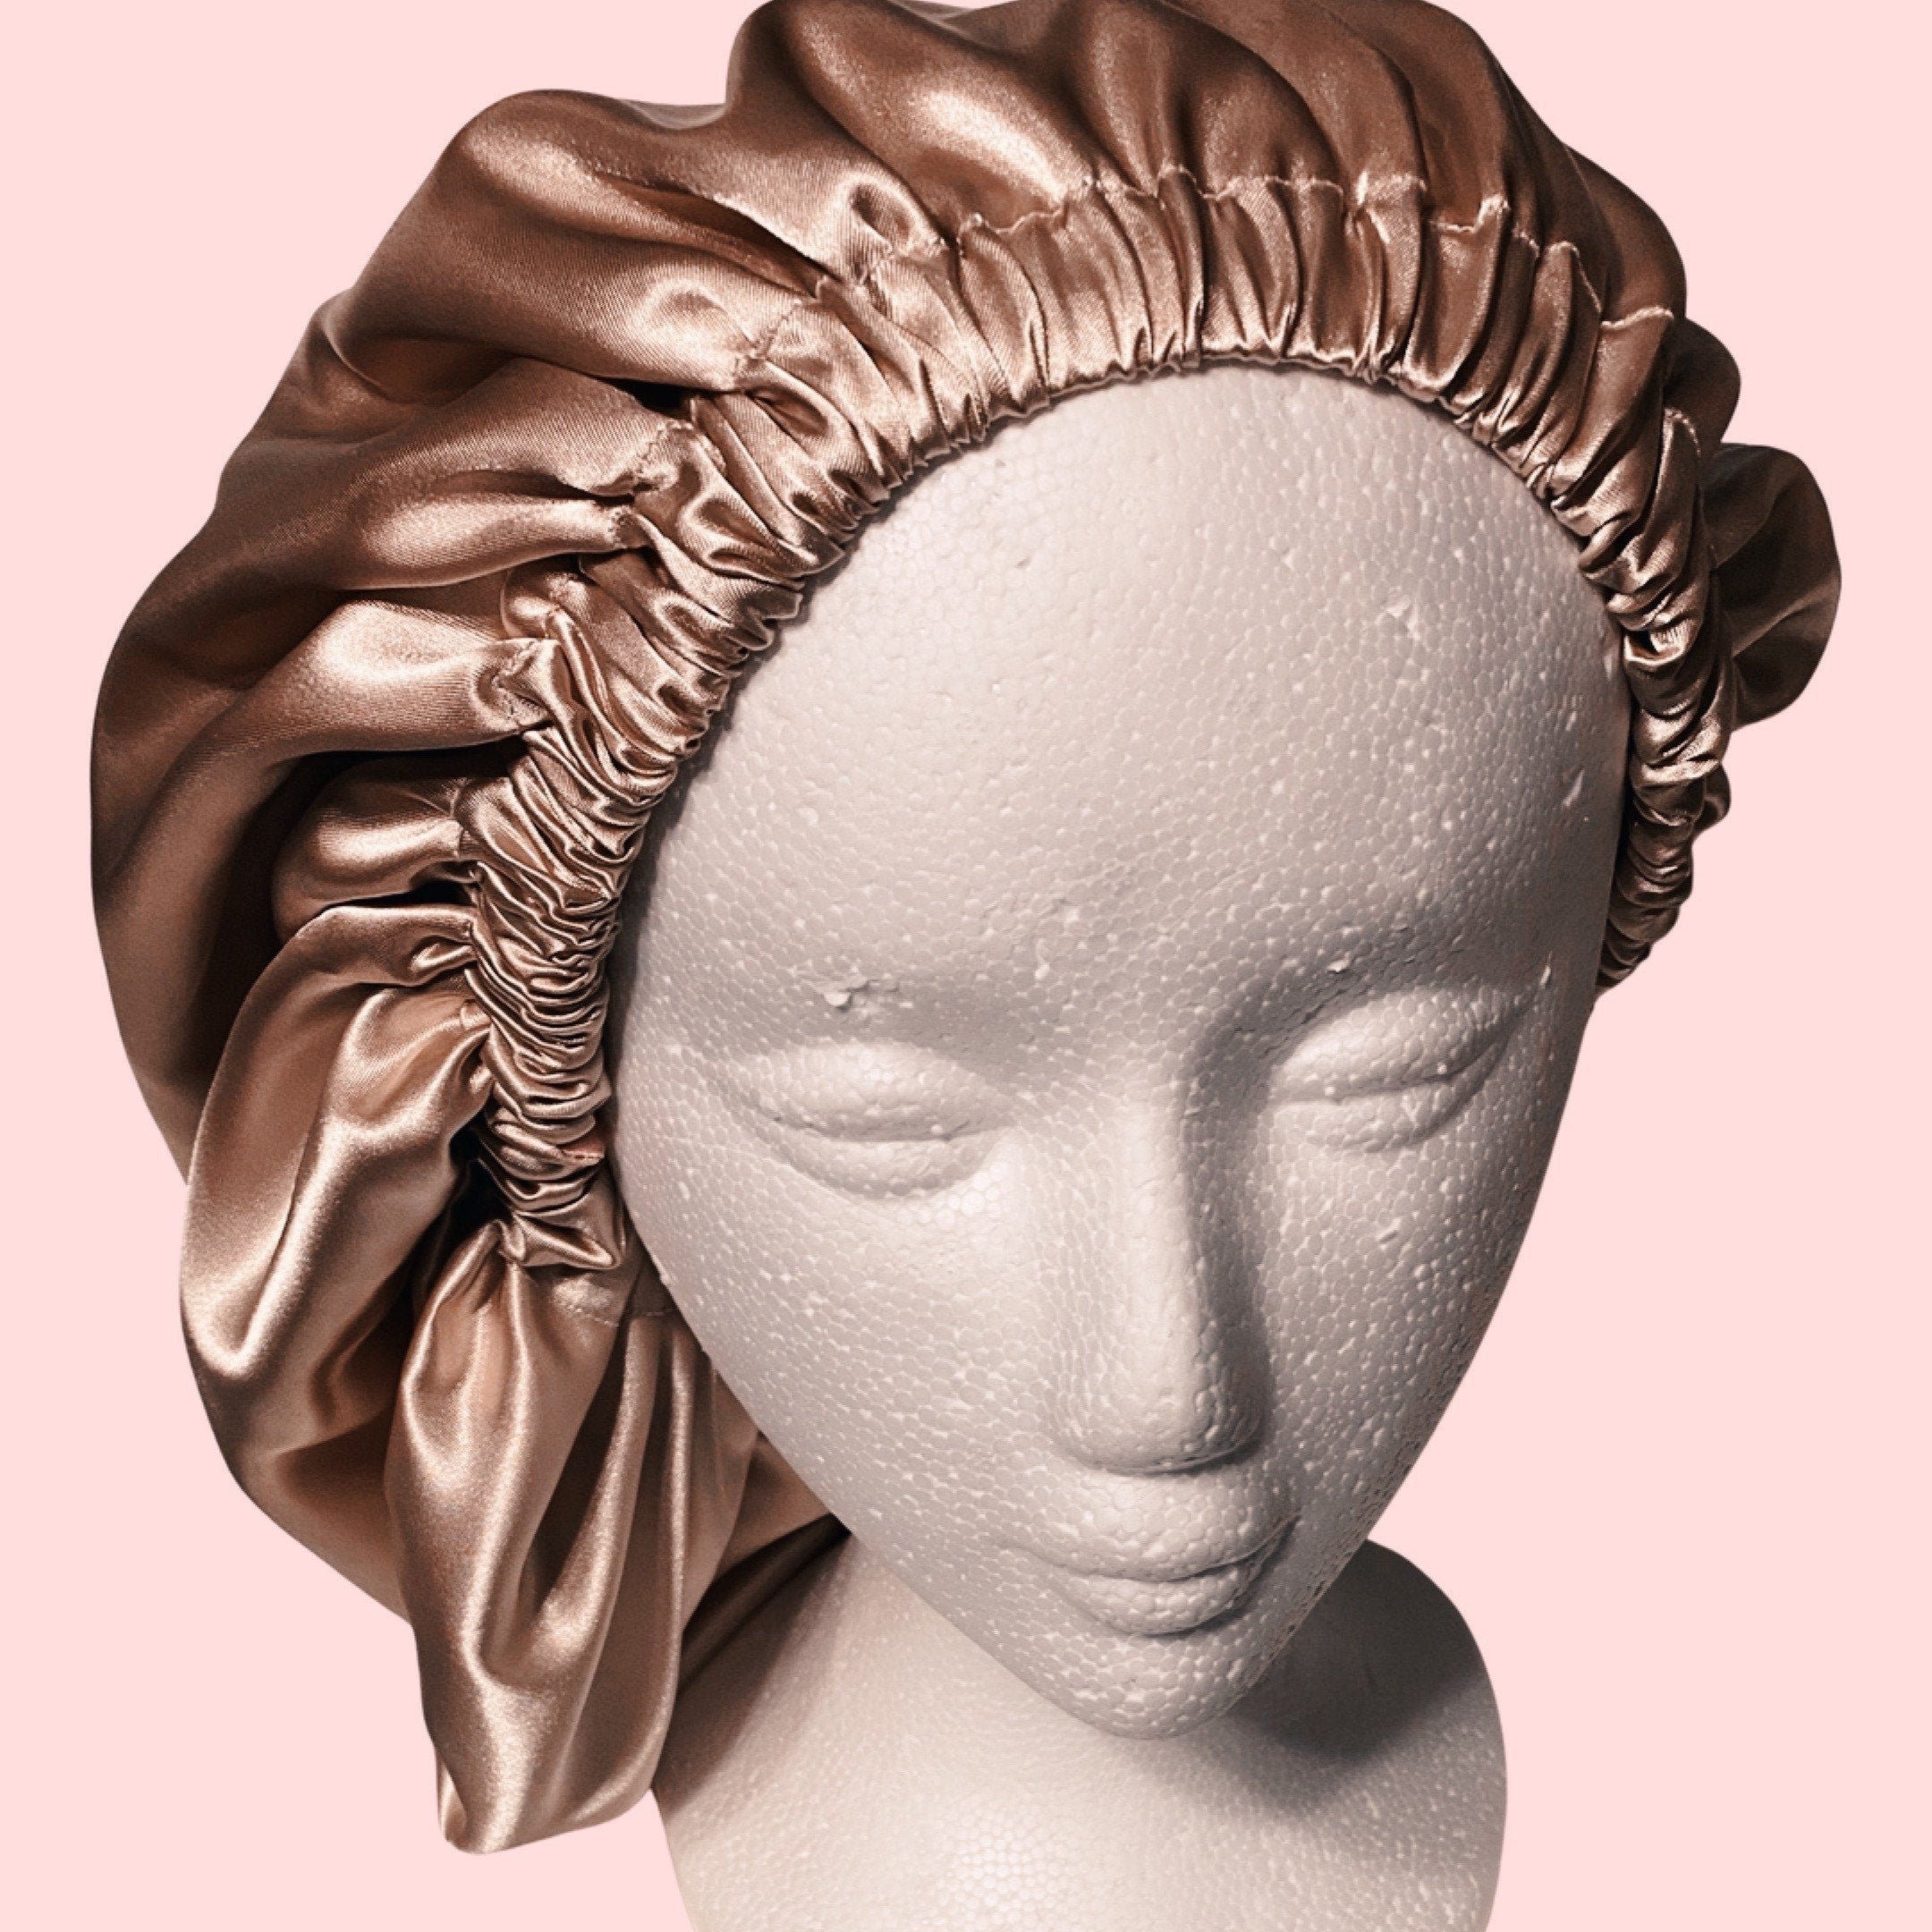 Bonnet – Exquisite Ladies Hair